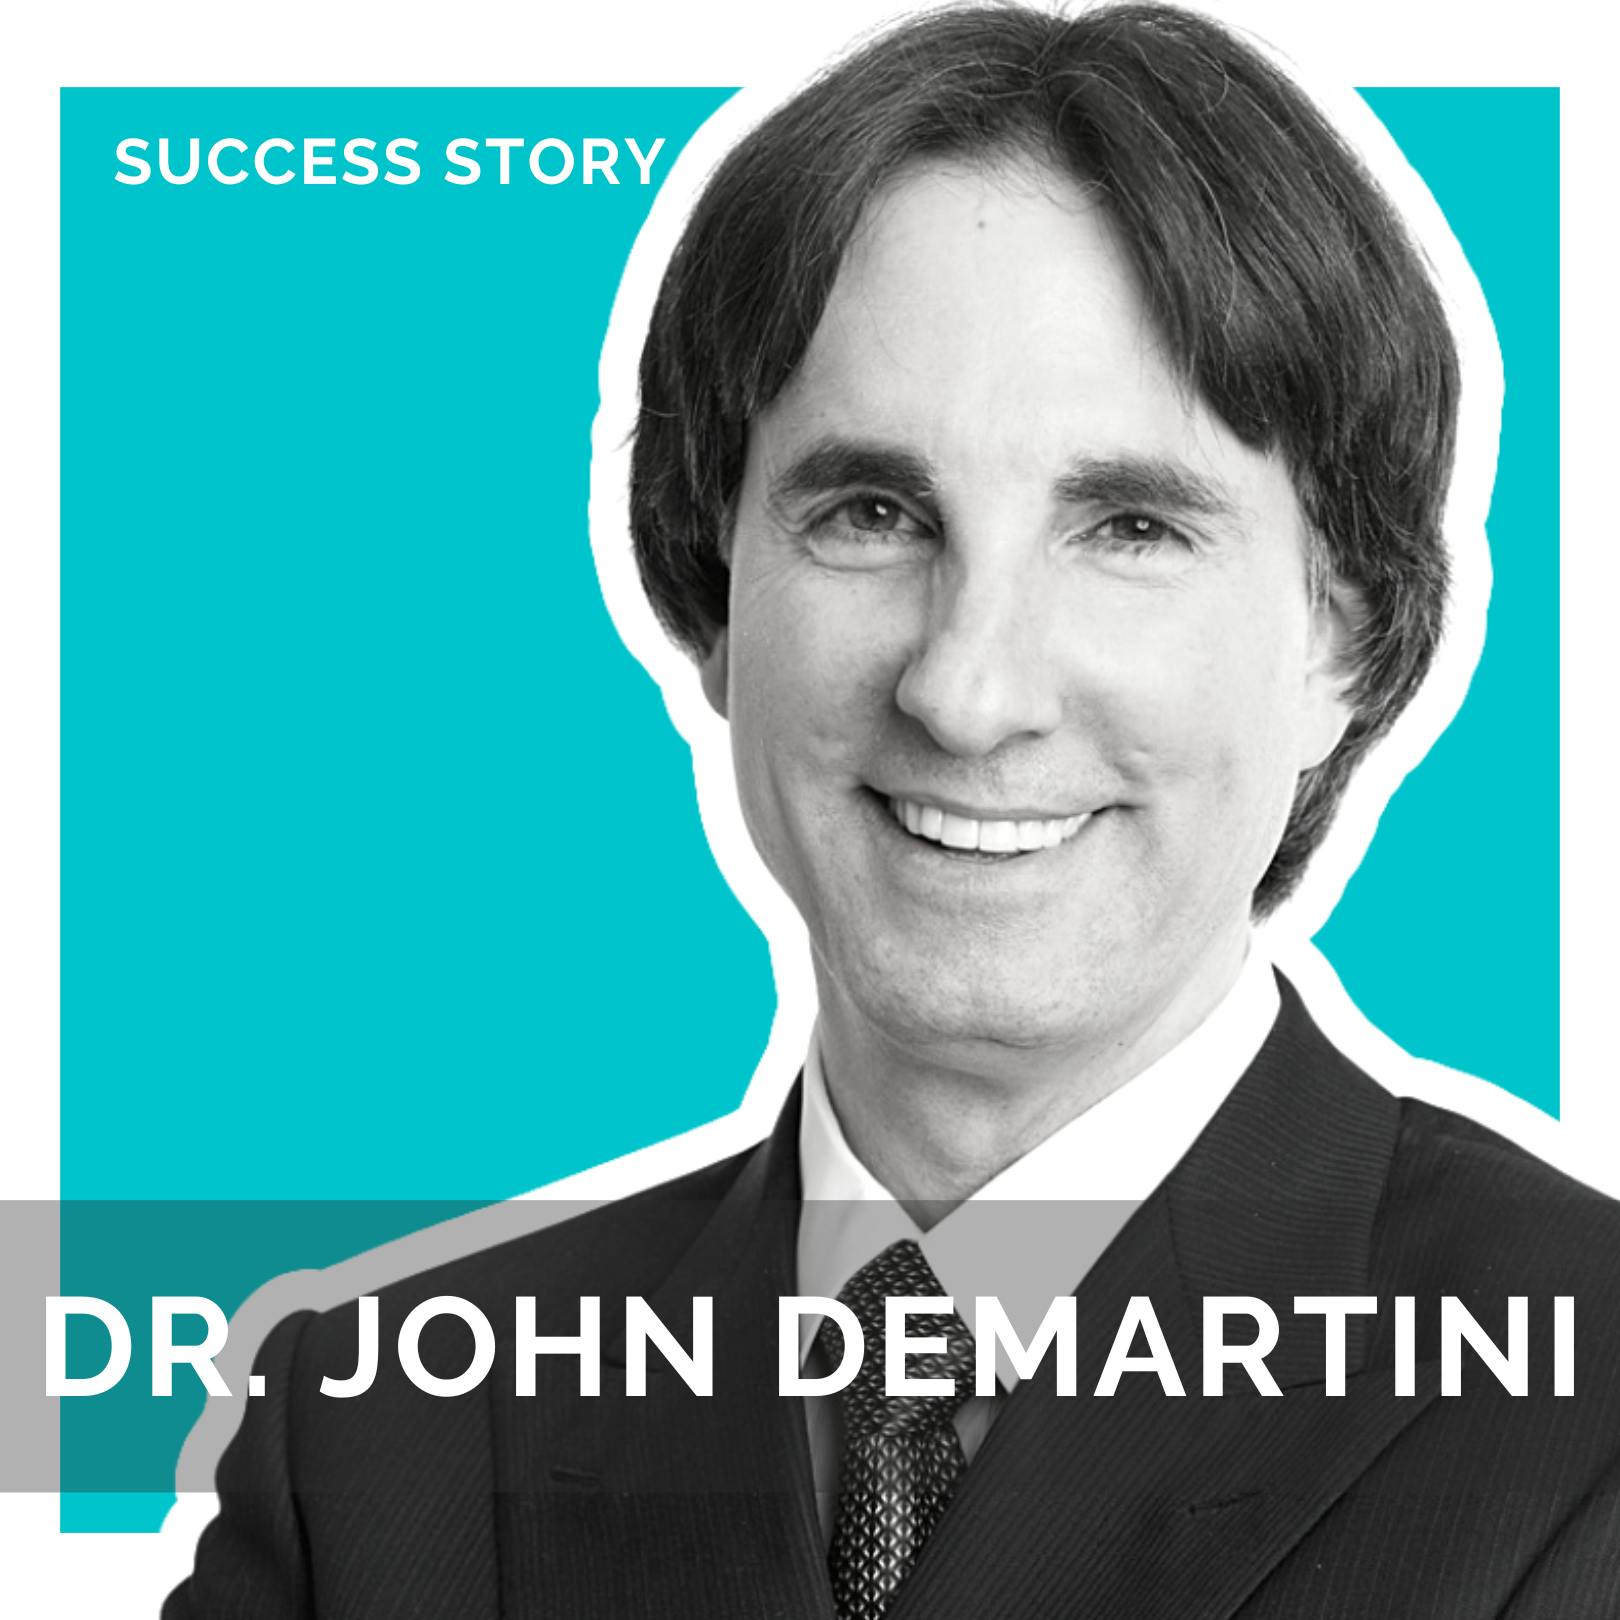 Dr. John Demartini - Human Behavior Expert, Author & Speaker | How to Master Your Life